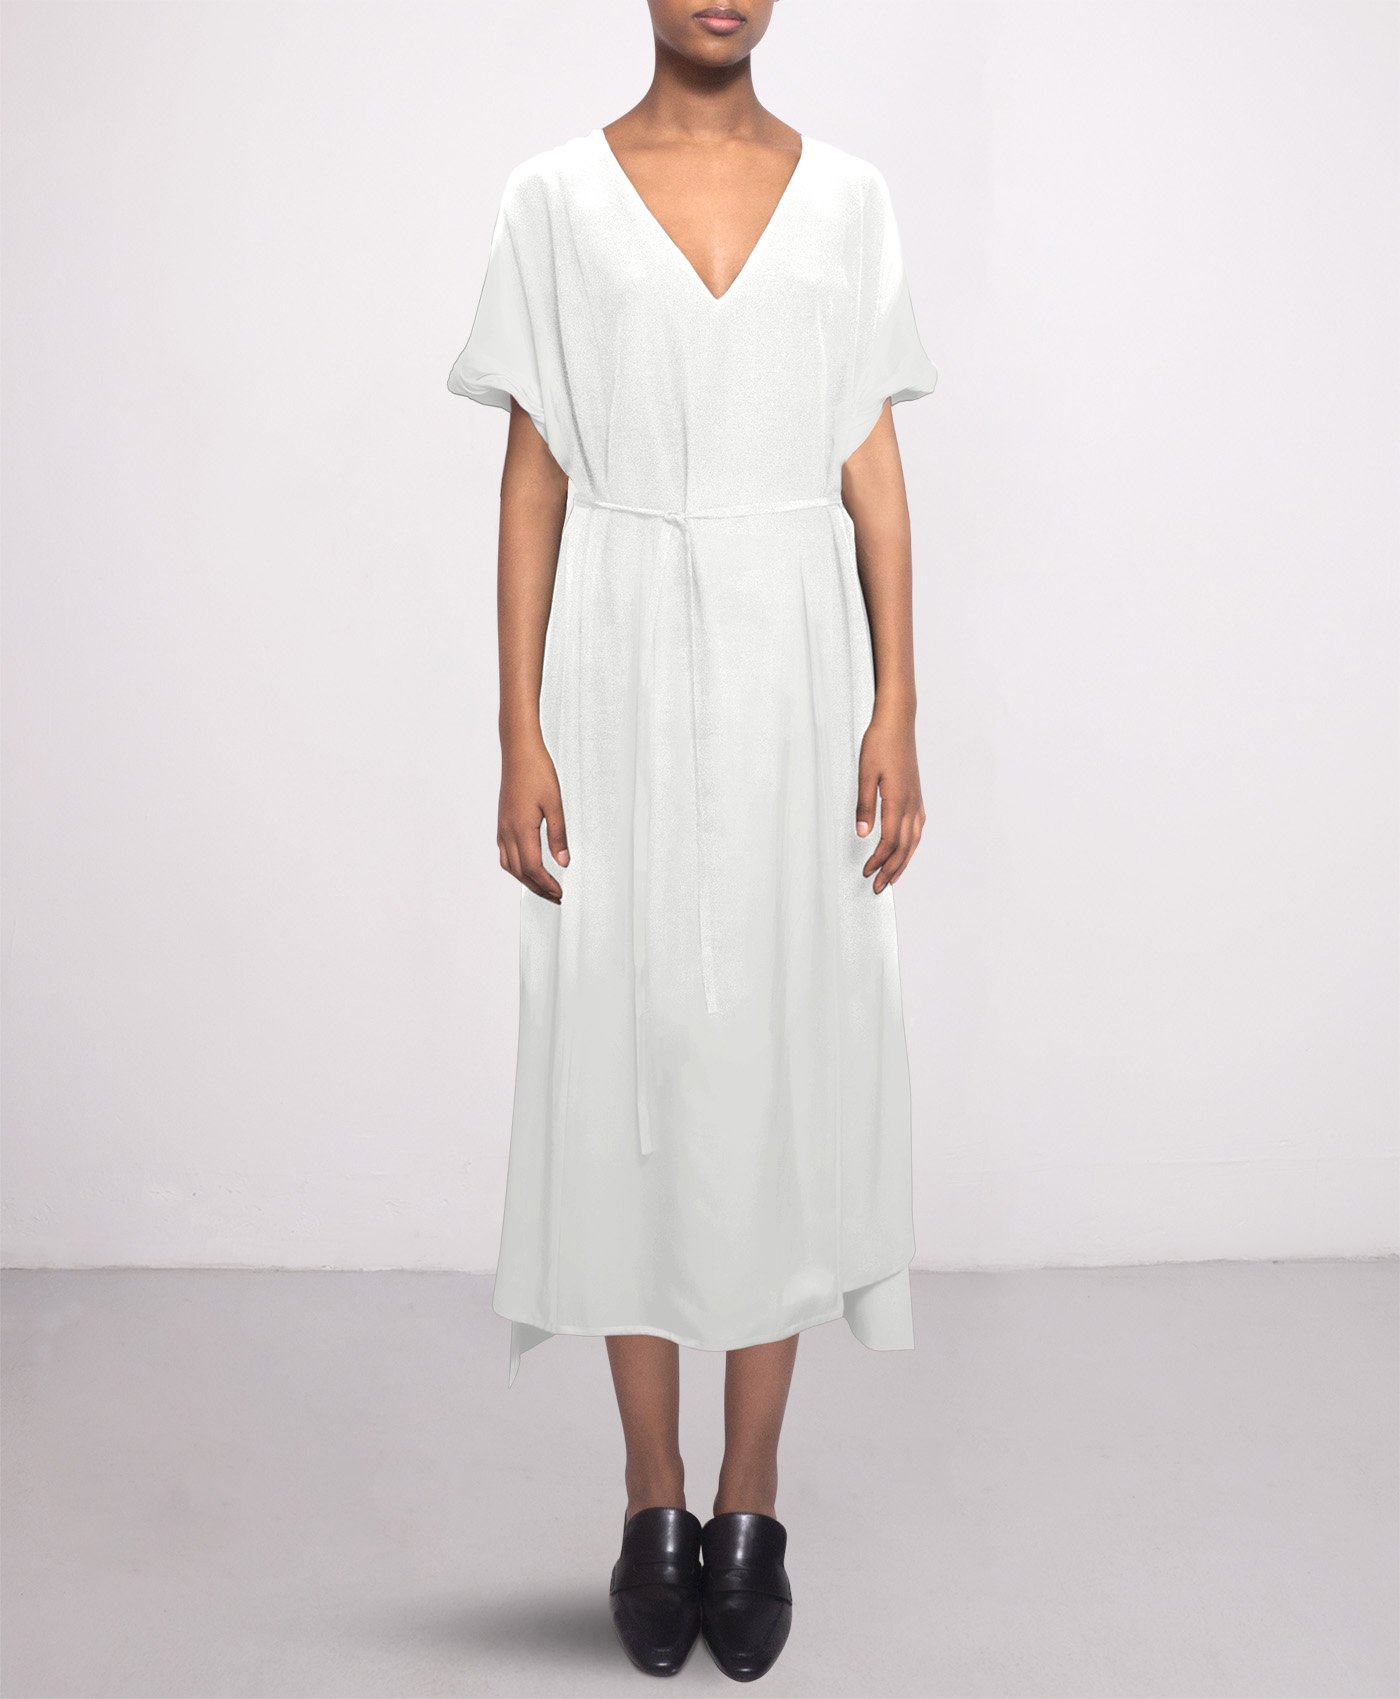 Long day silk dress in Off white SL VN - Studio Heijne